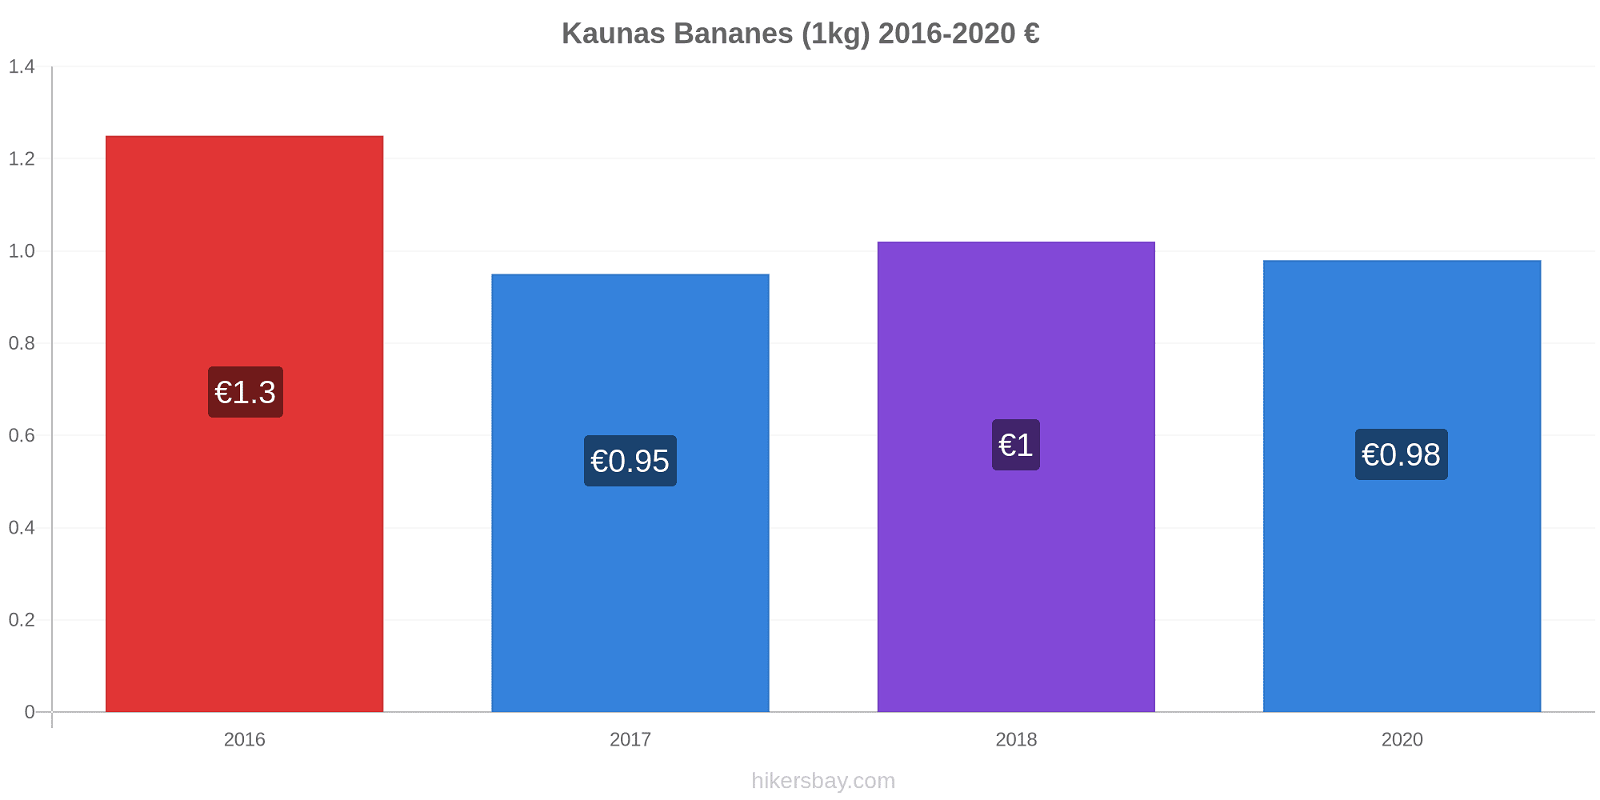 Kaunas changements de prix Bananes (1kg) hikersbay.com